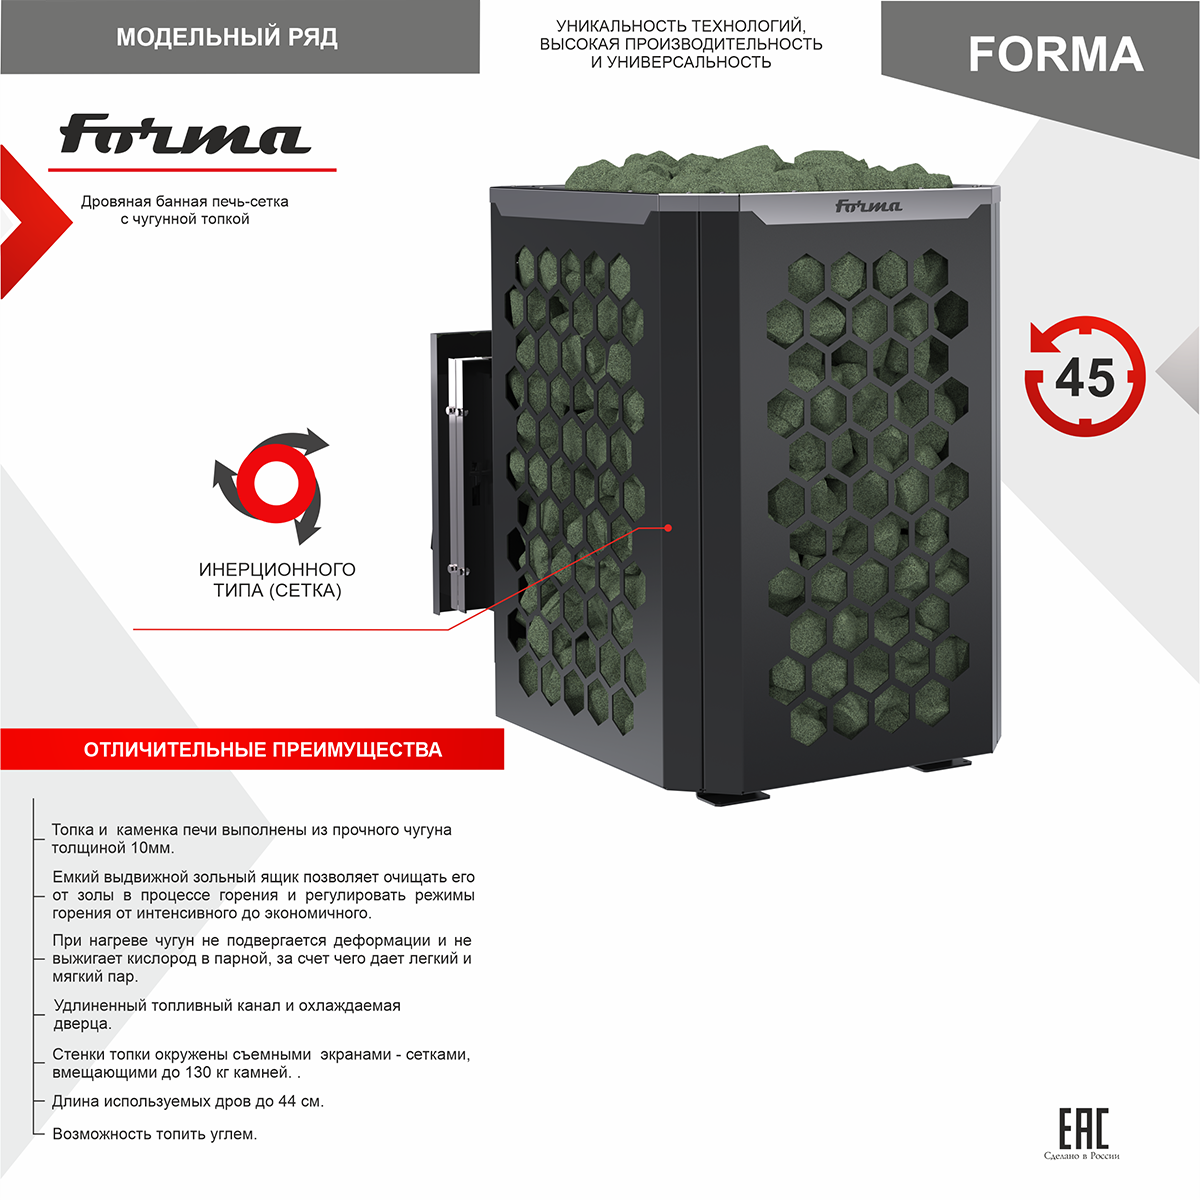 Чугунная печь-каменка Термокрафт FORMA 18S (Форма 18S)